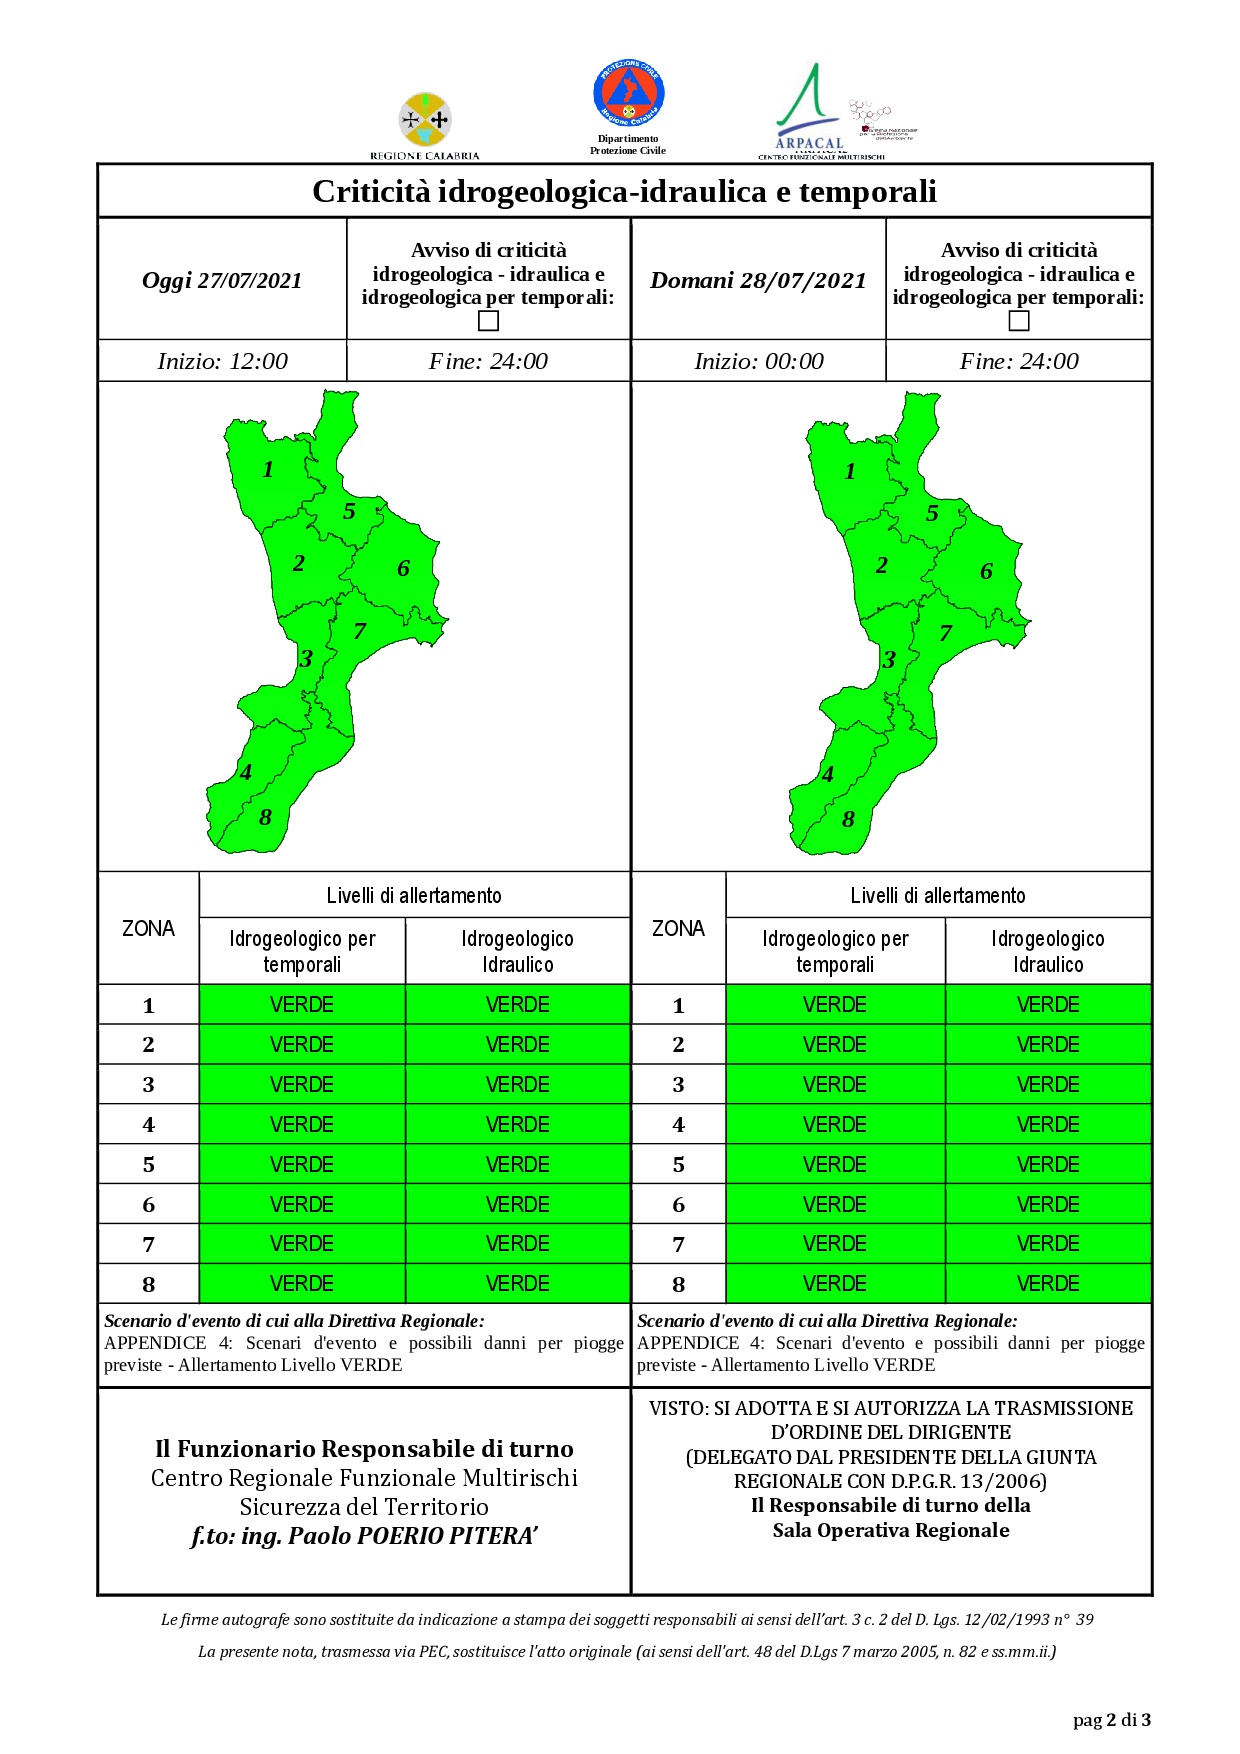 Criticità idrogeologica-idraulica e temporali in Calabria 27-07-2021